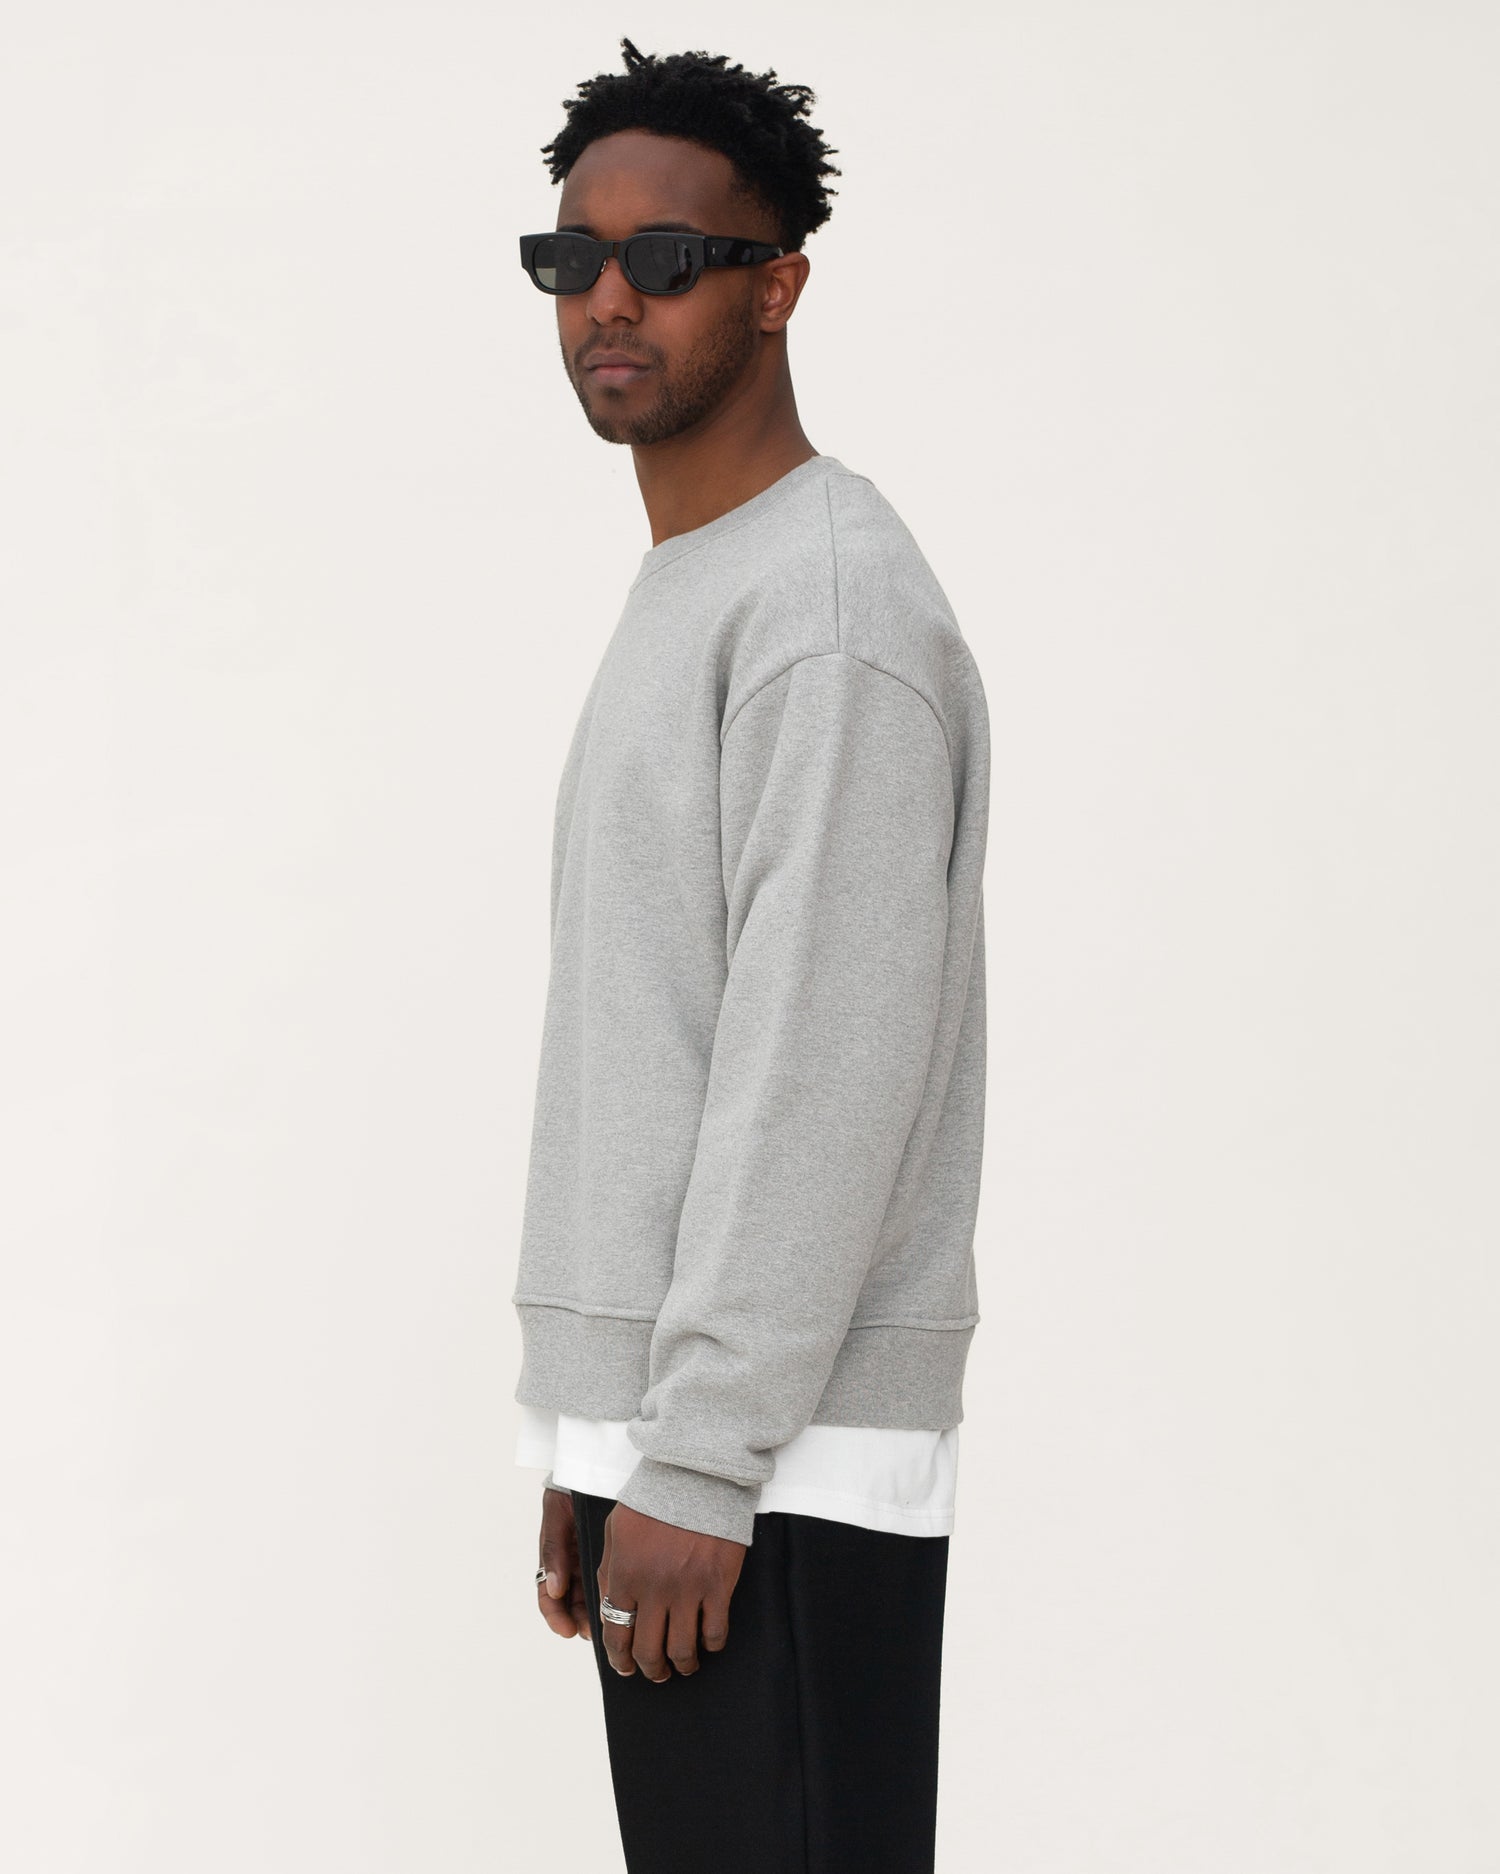 mens designer sweatshirts, mens grey sweatshirt, side view